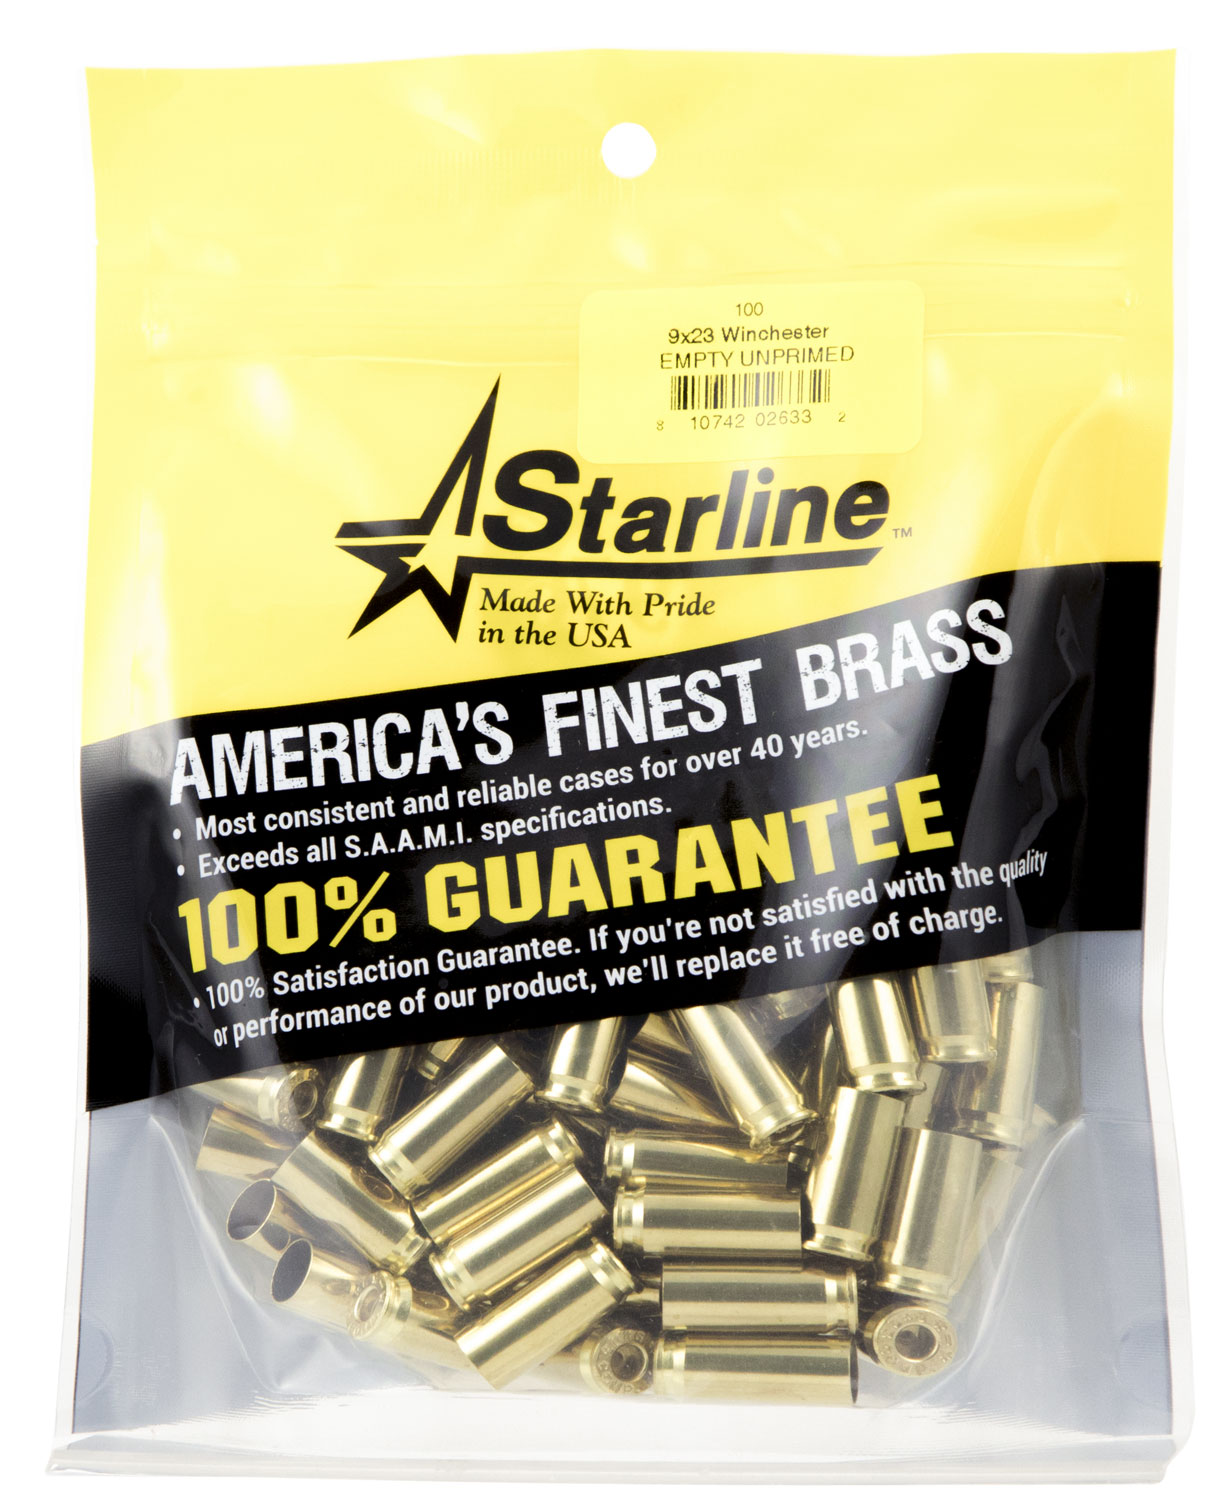 Starline Brass Star9x23WinE Unprimed Cases 9x23 Winchester 100/Pack